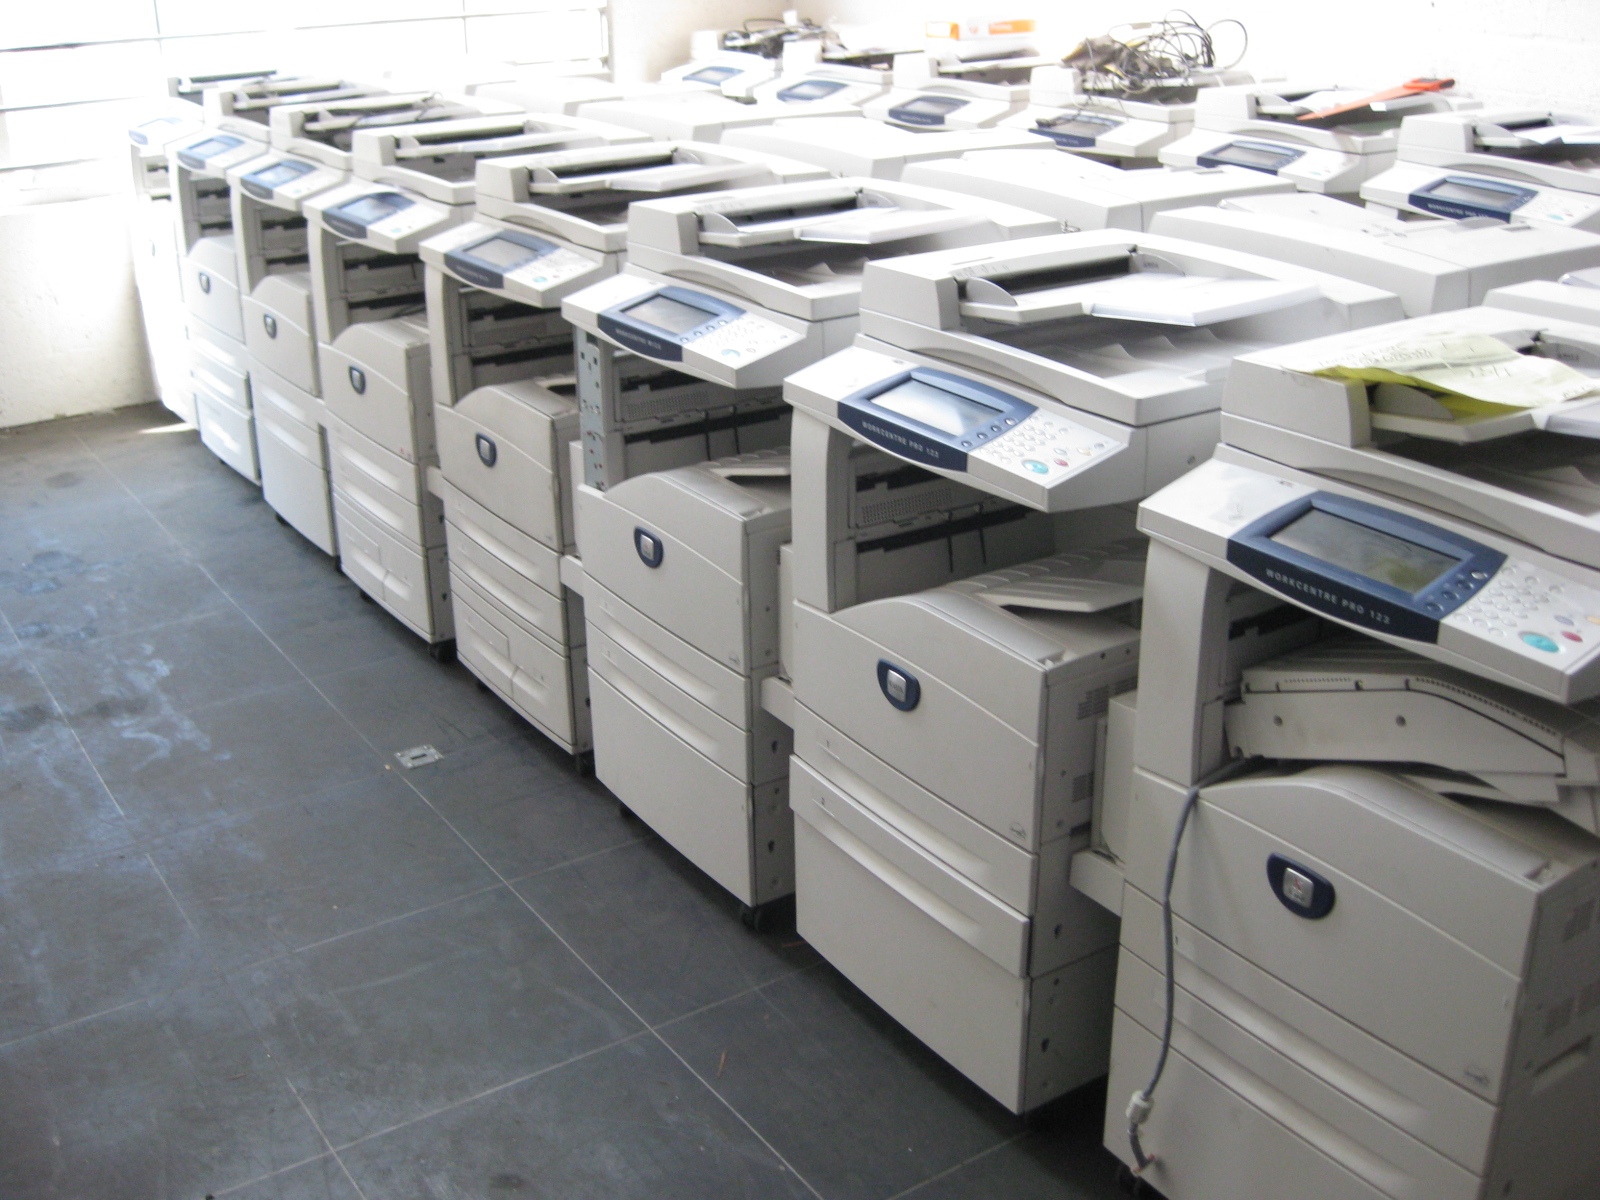 How to Choose a Photocopy Machine for Sale